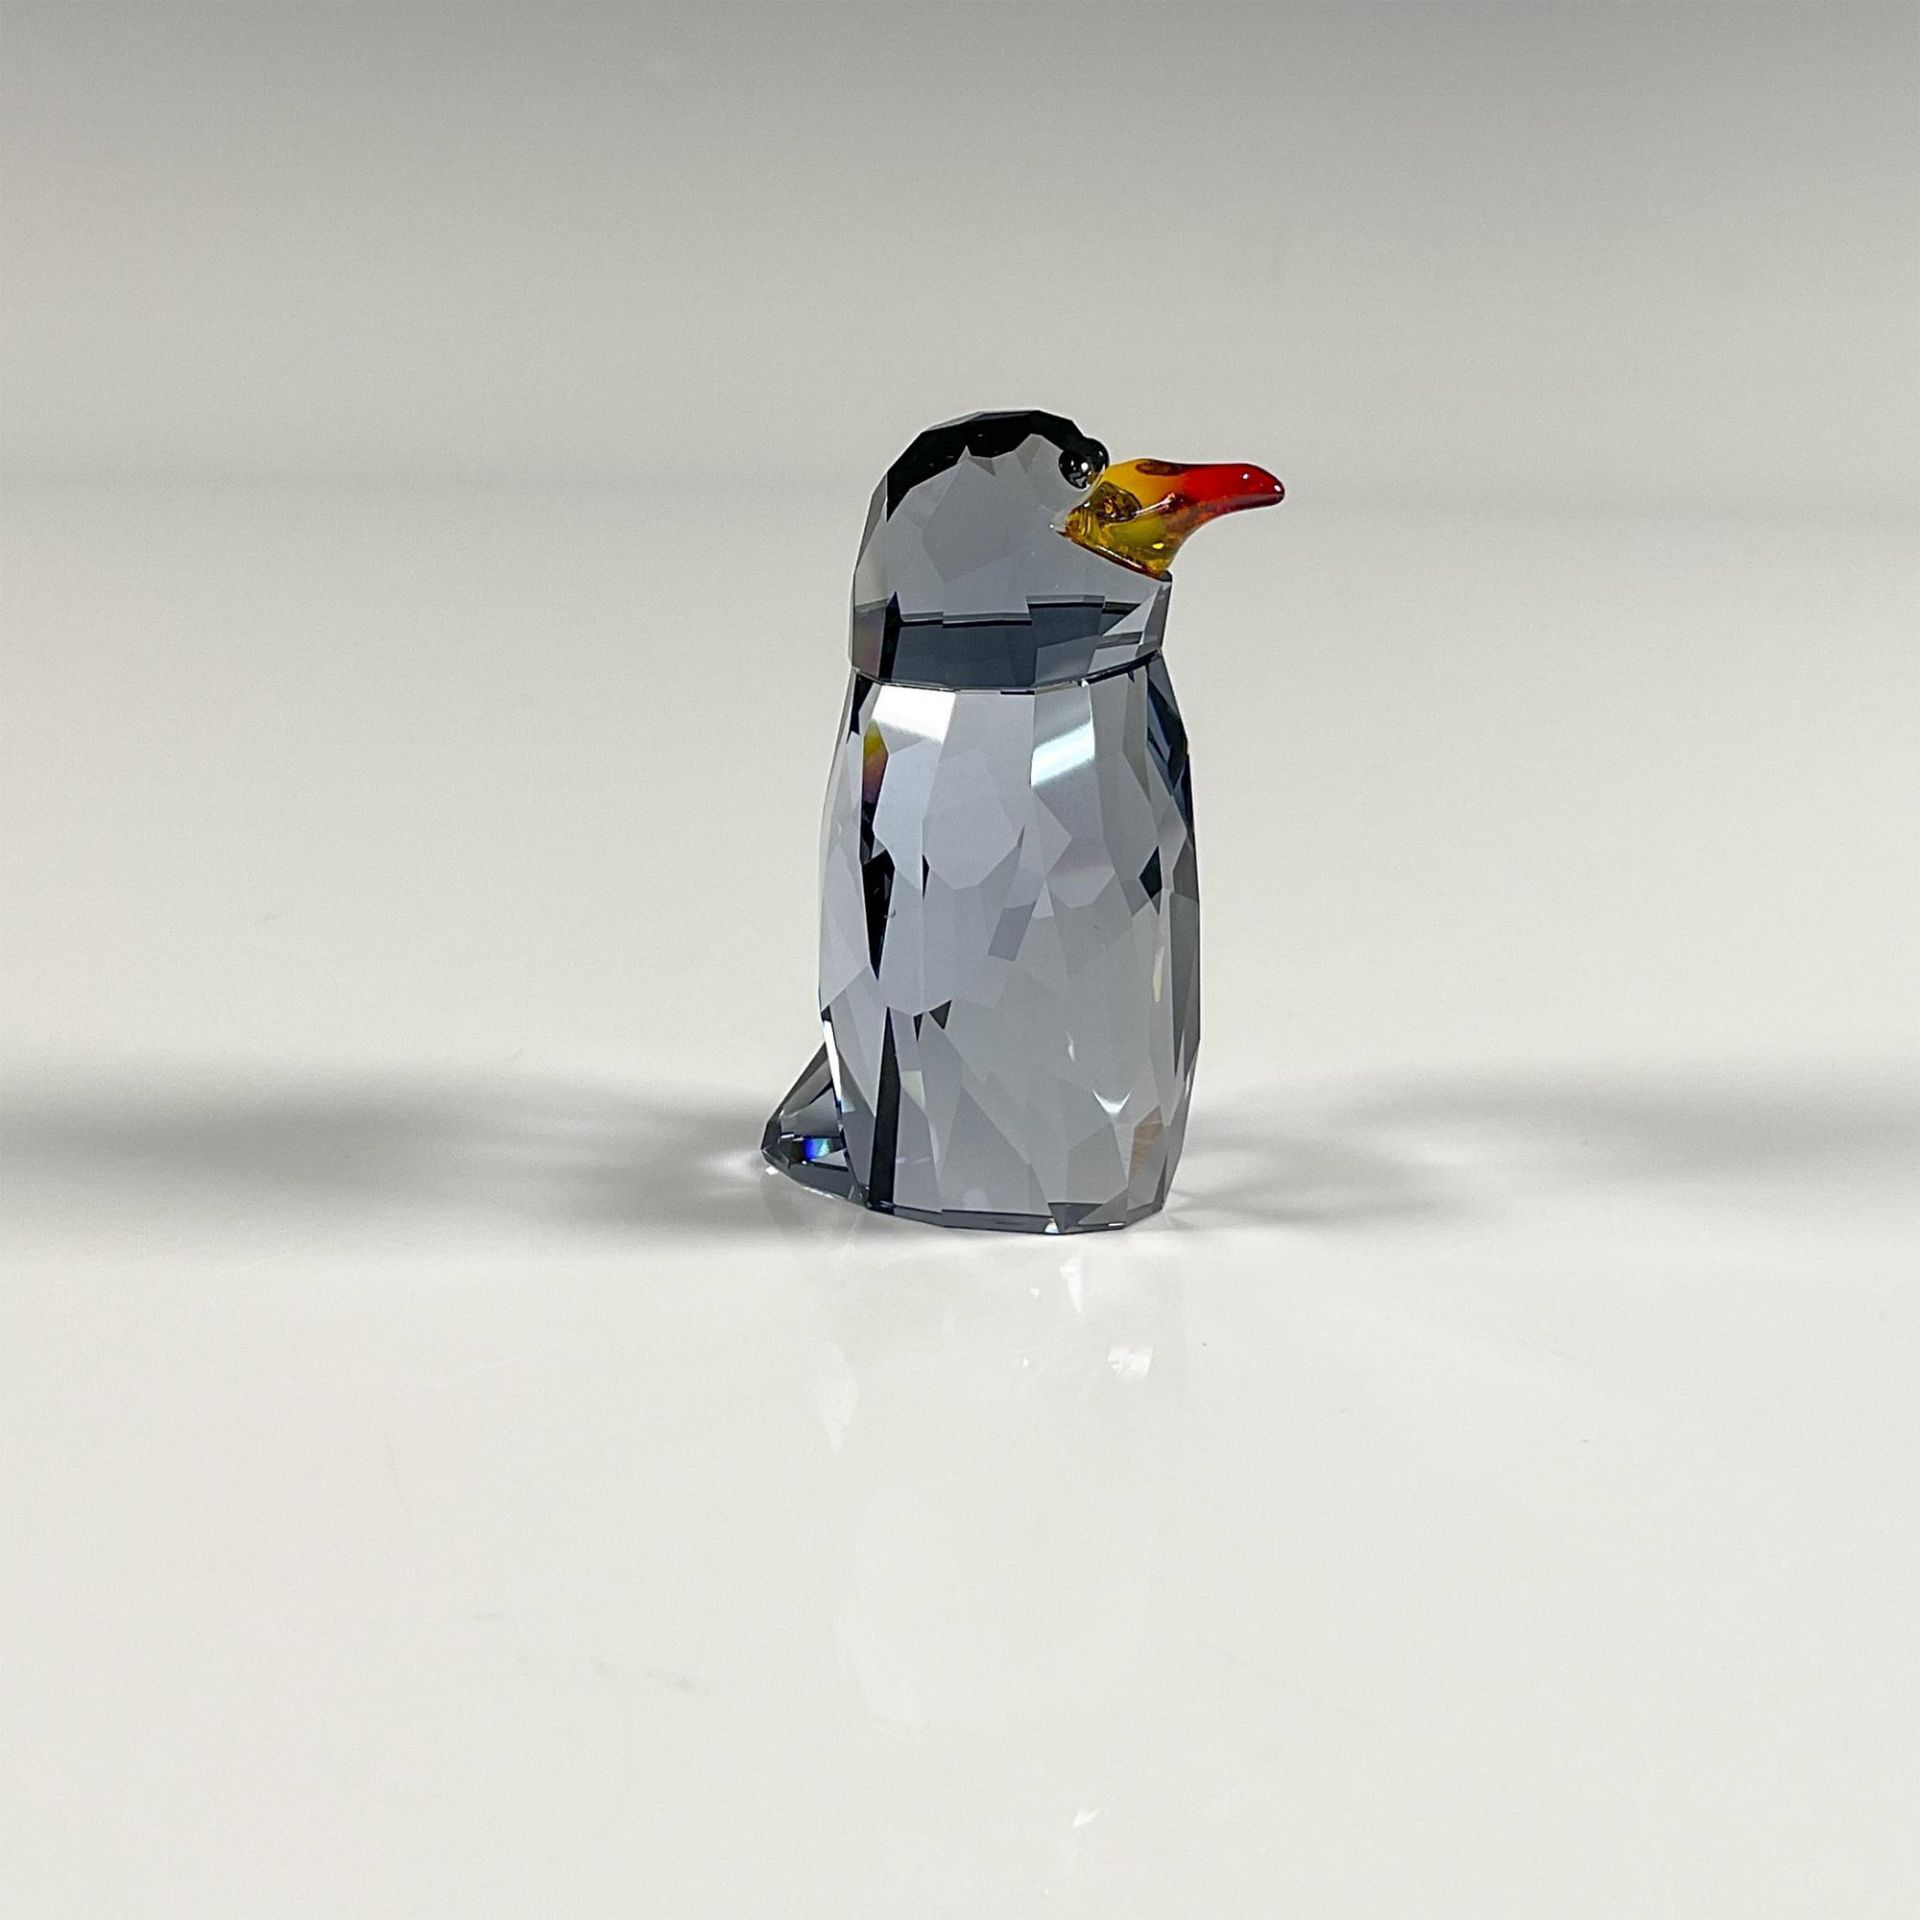 Swarovski Crystal Figurine, Jack The Penguin